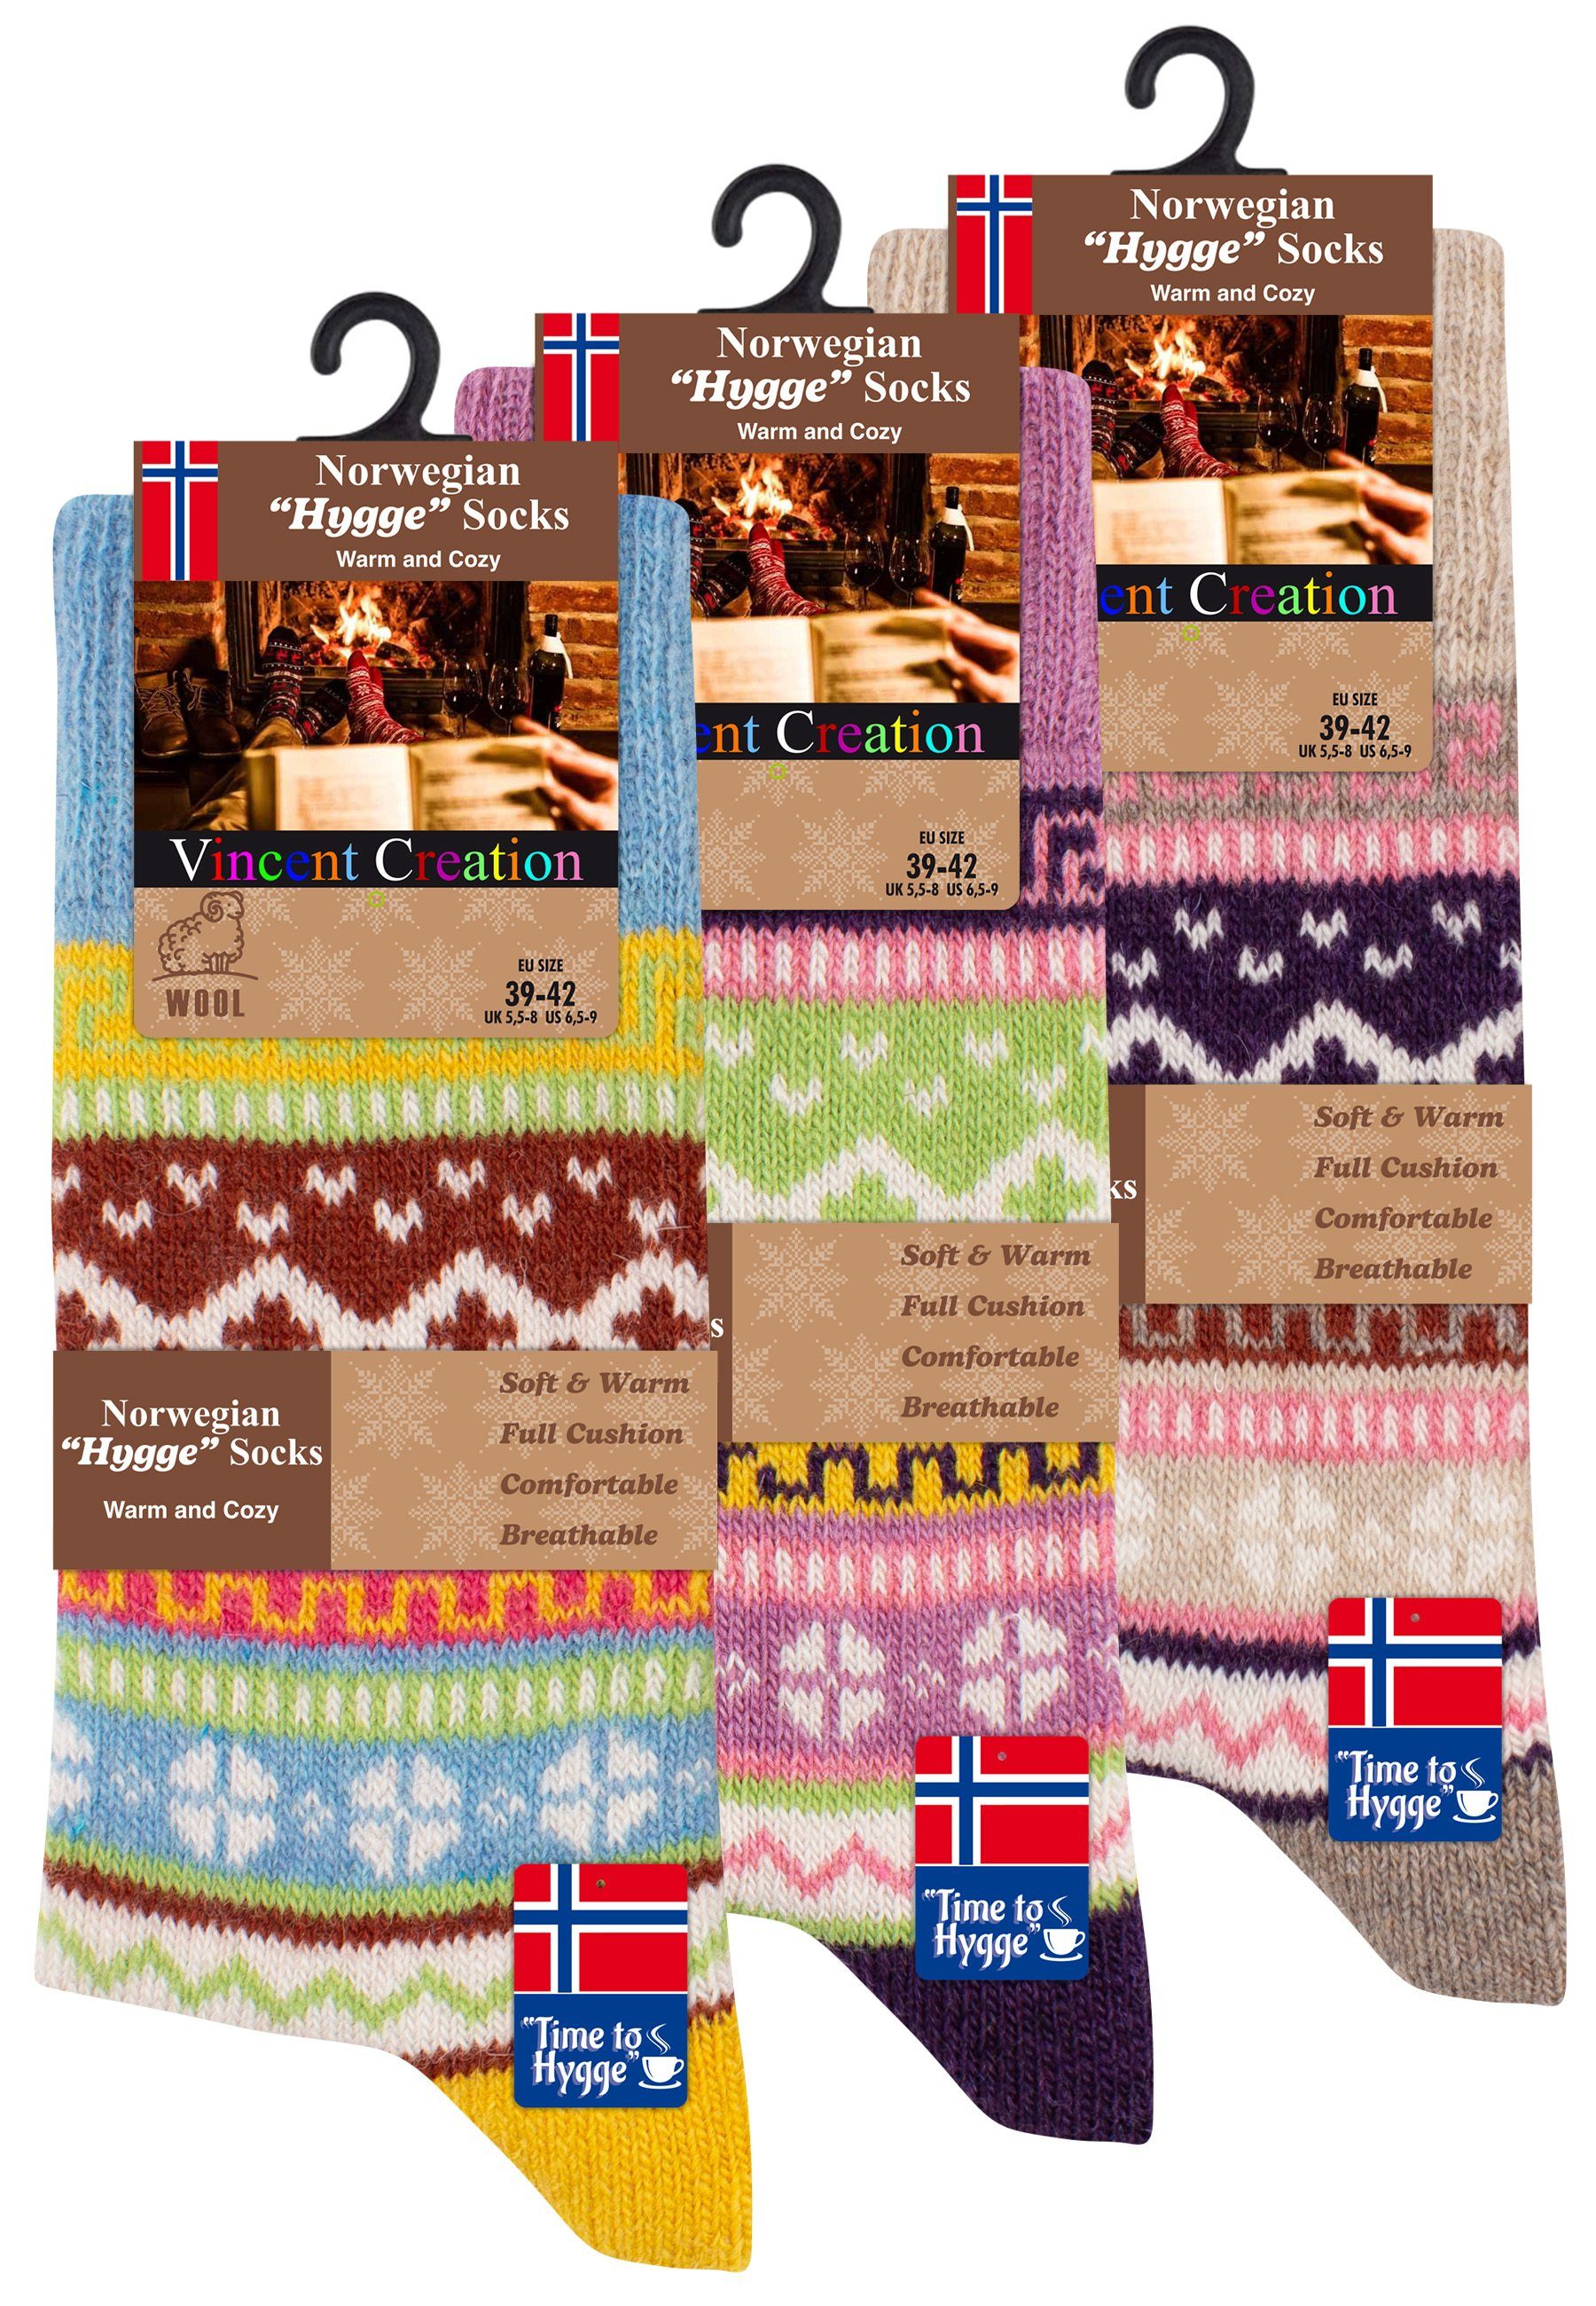 Socken Vincent Creation® Wolle mit (3-Paar) Norwegersocken Hygge